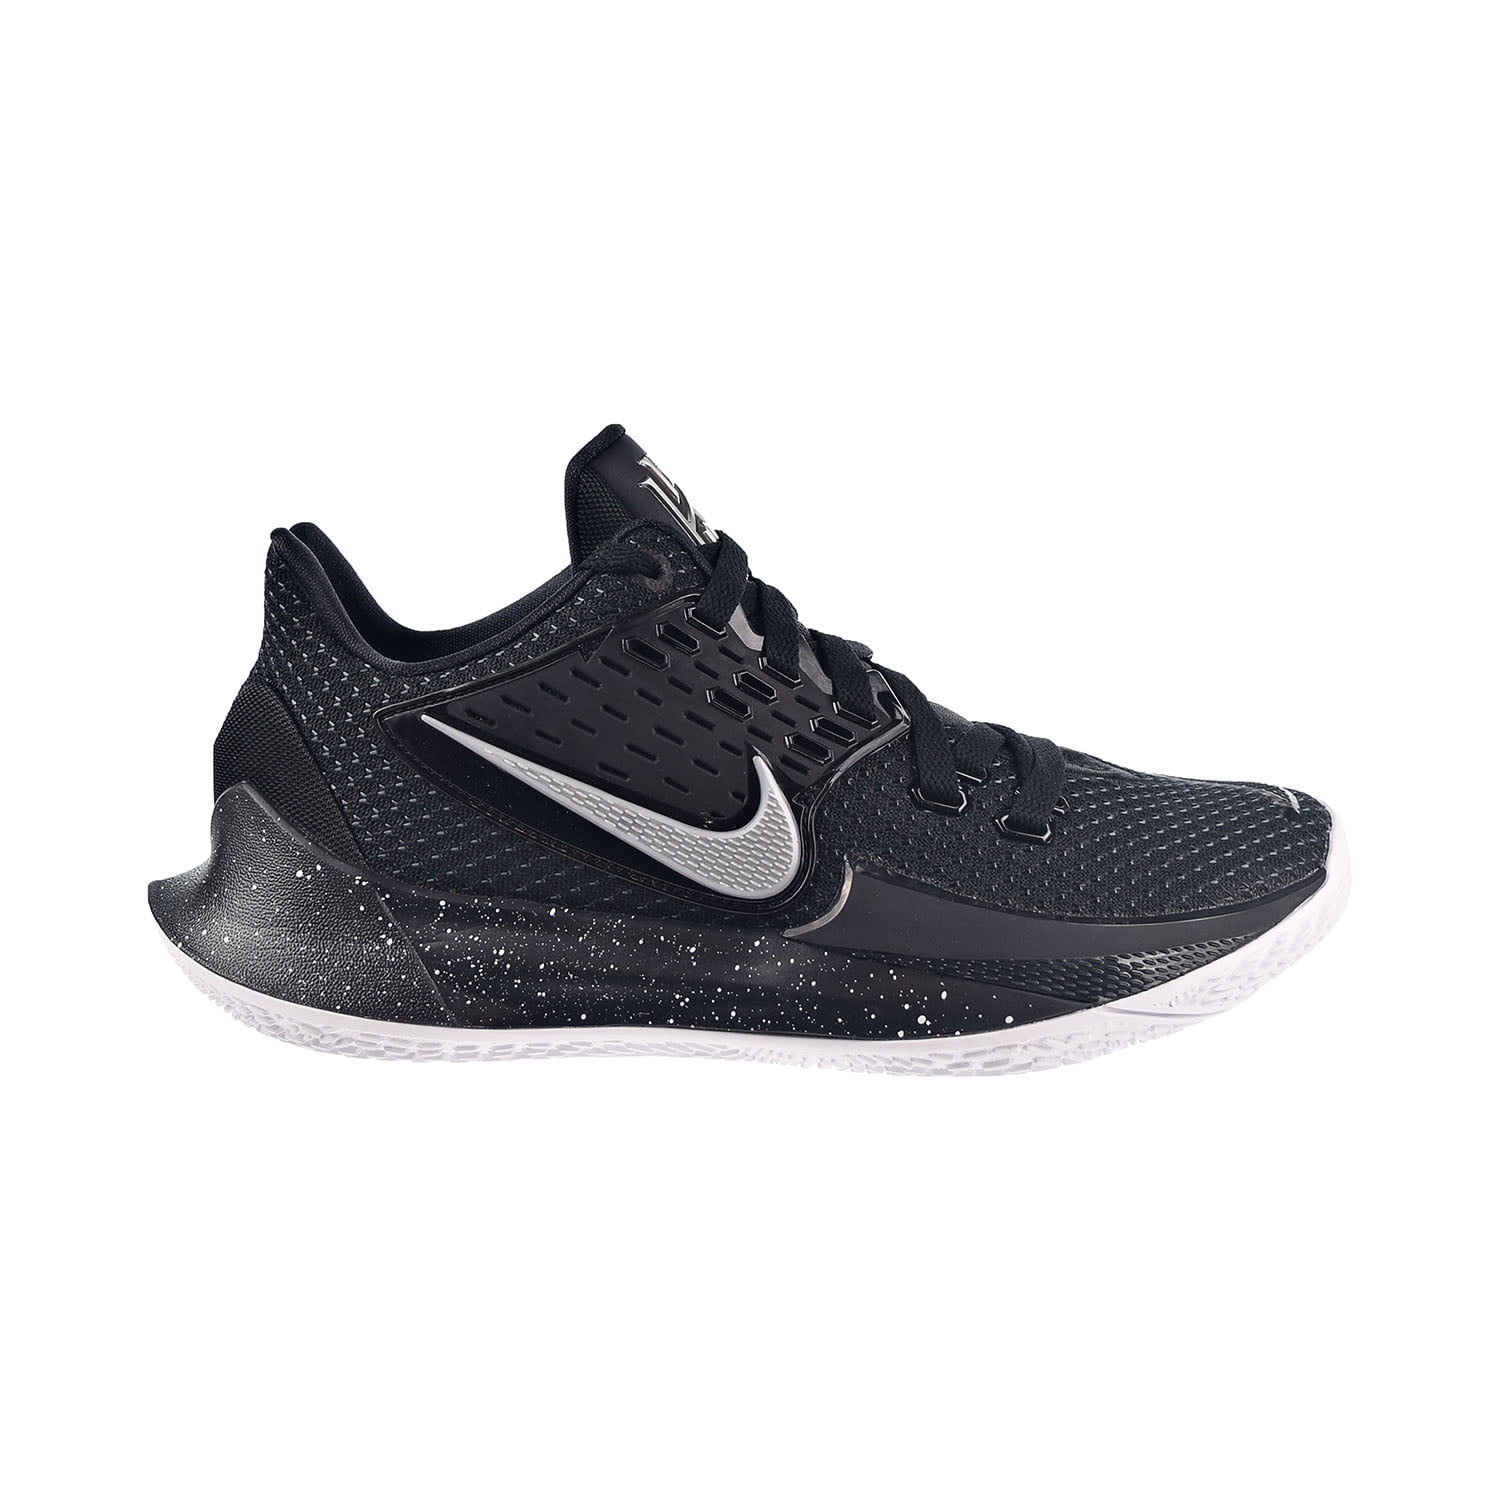 Nike Kyrie Low 2 Men's Shoes Black-Metallic Silver av6337-003 